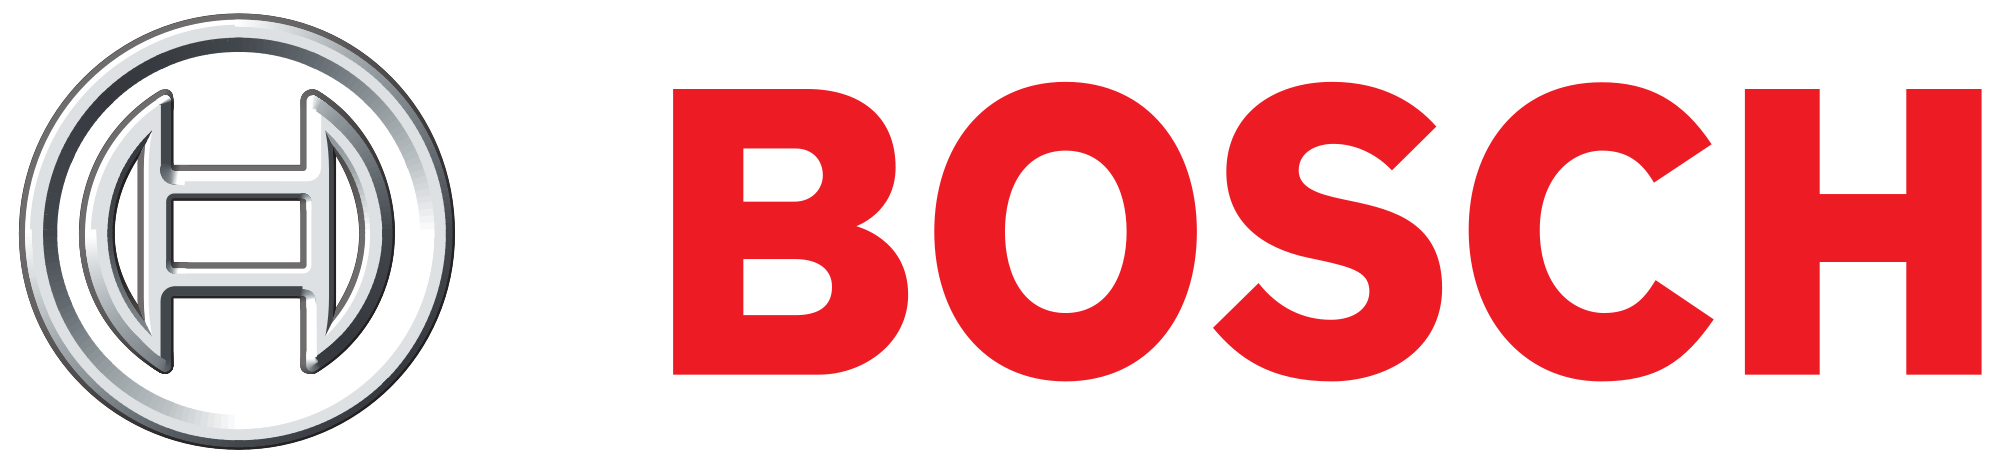 Machine Brand Bosch Electronic Logo #39987